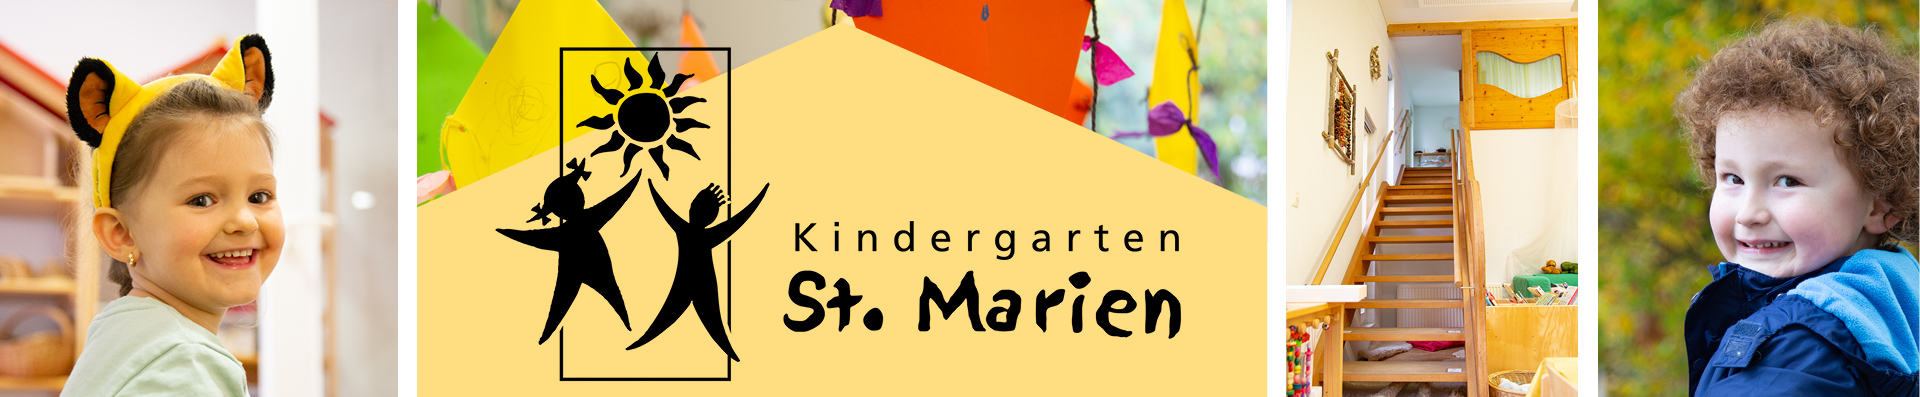 Kindergarten St. Marien Walldorf